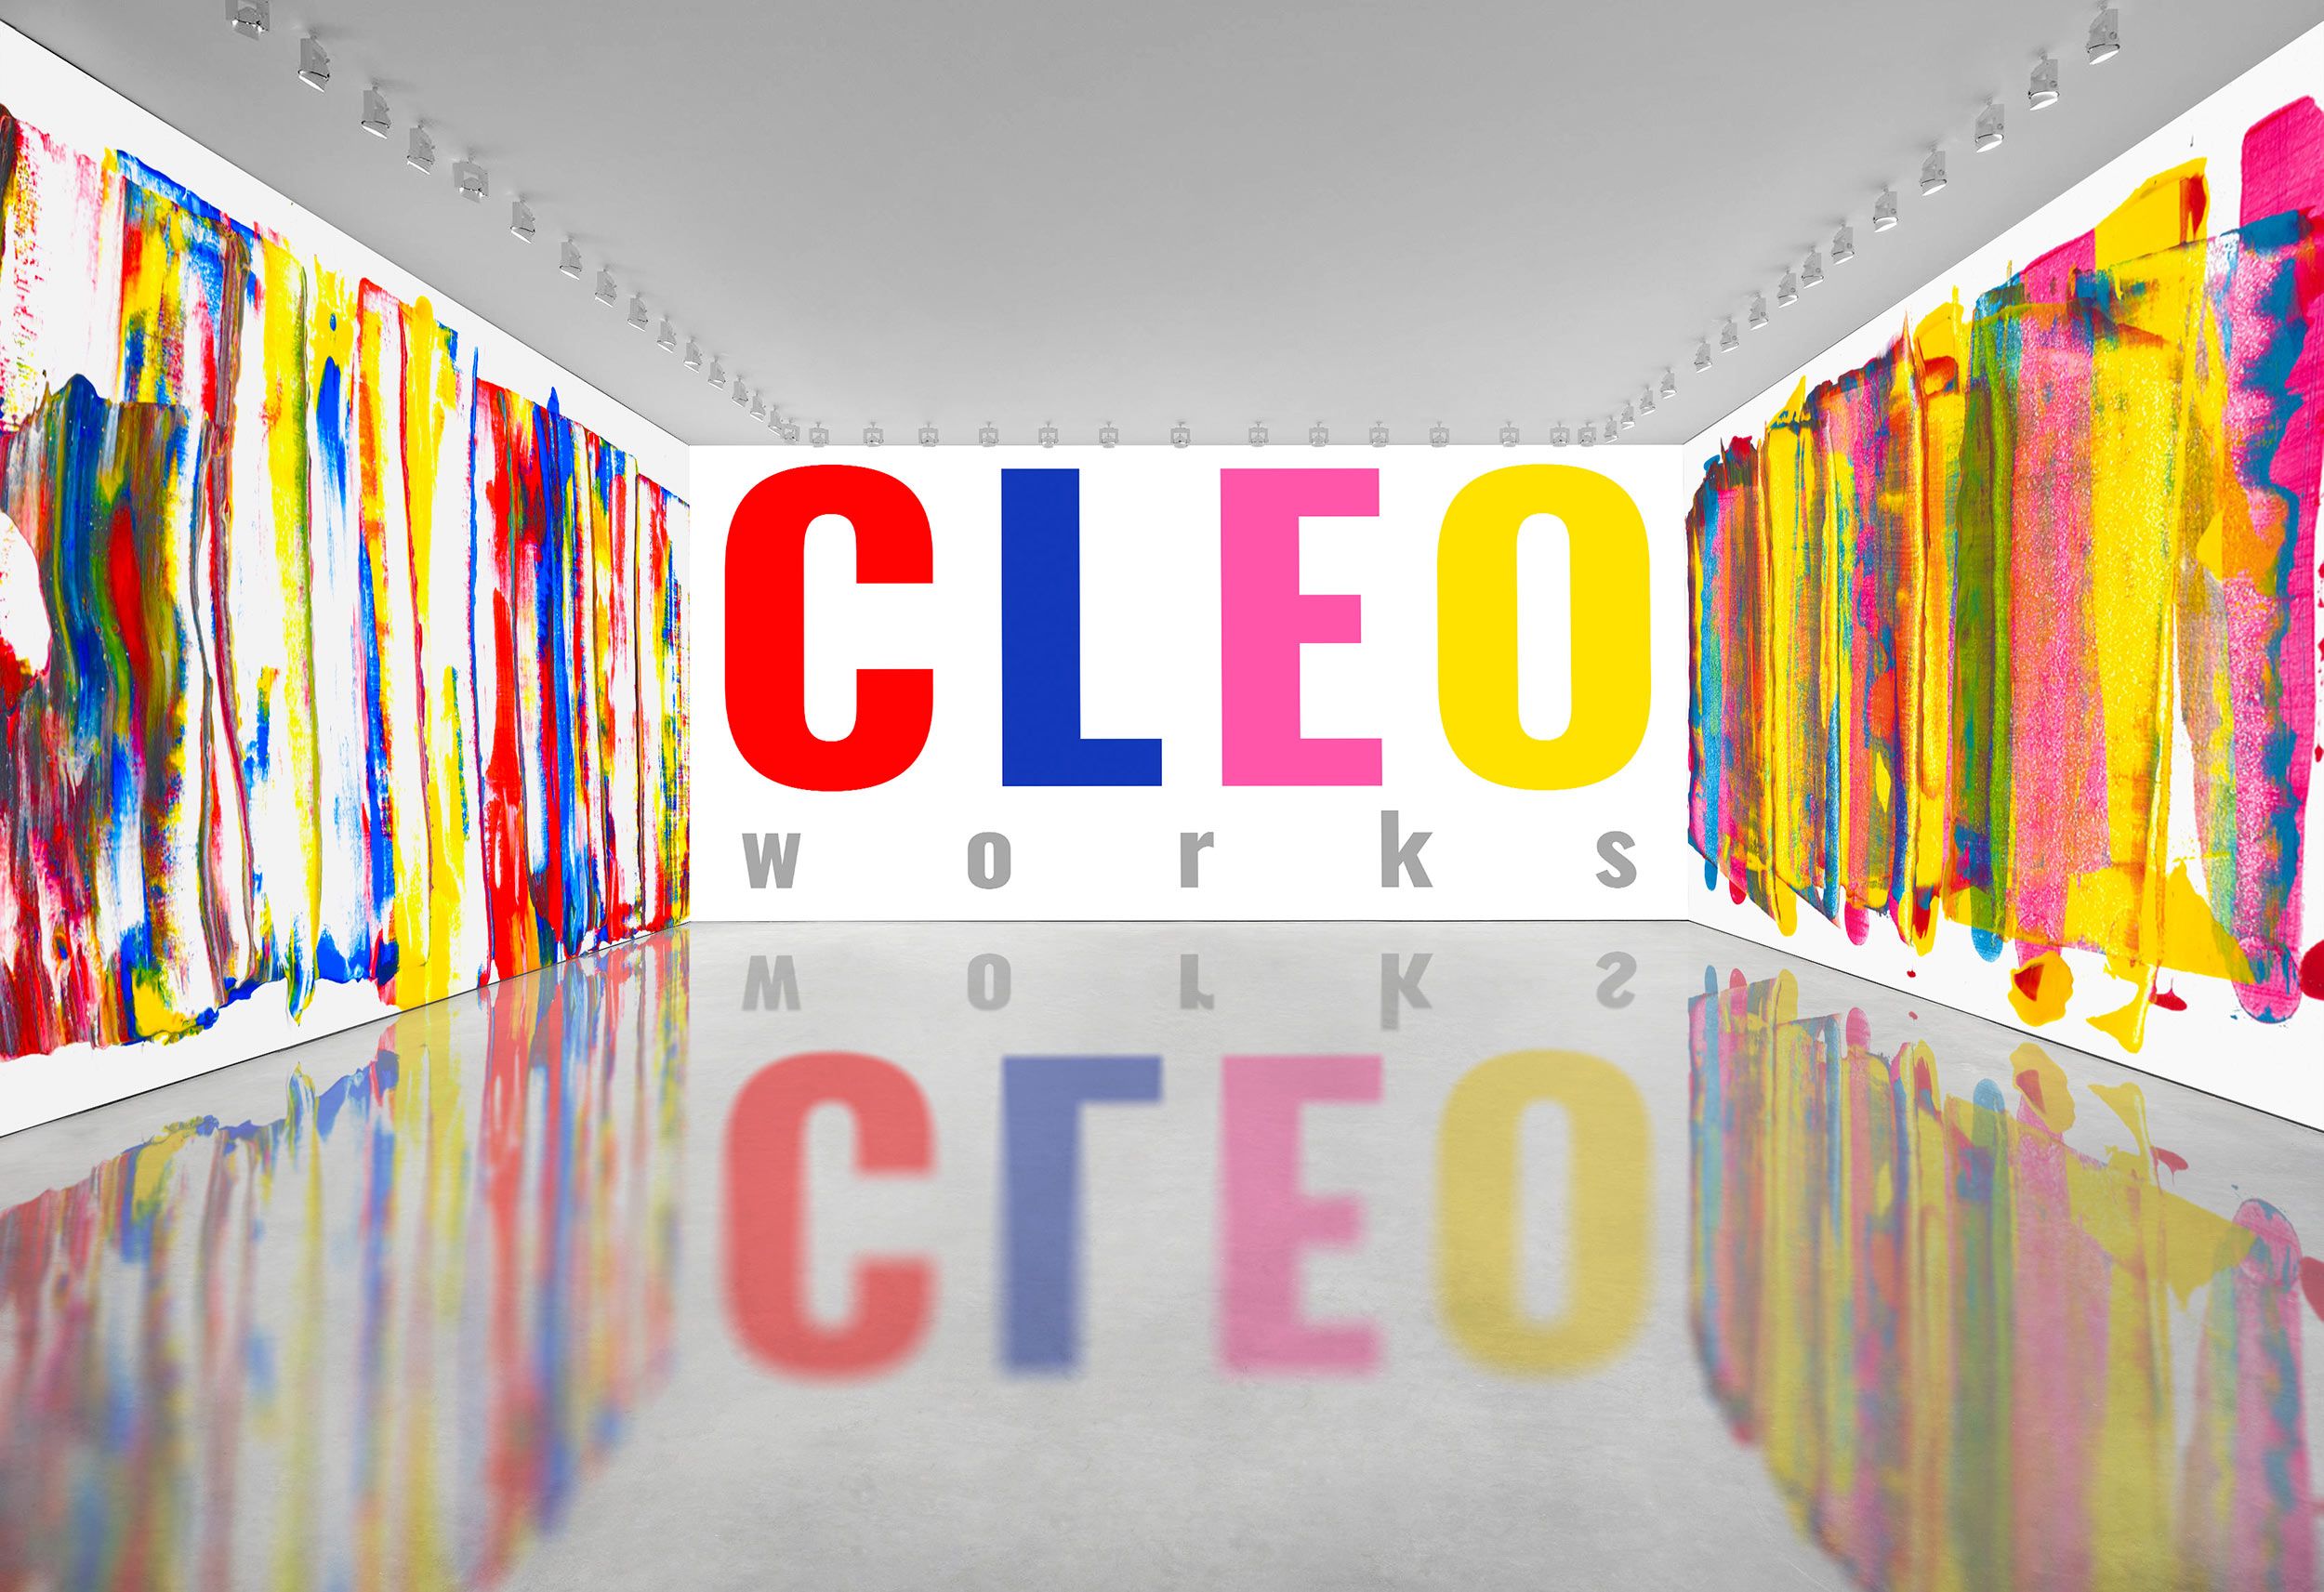 The Artist Cleo